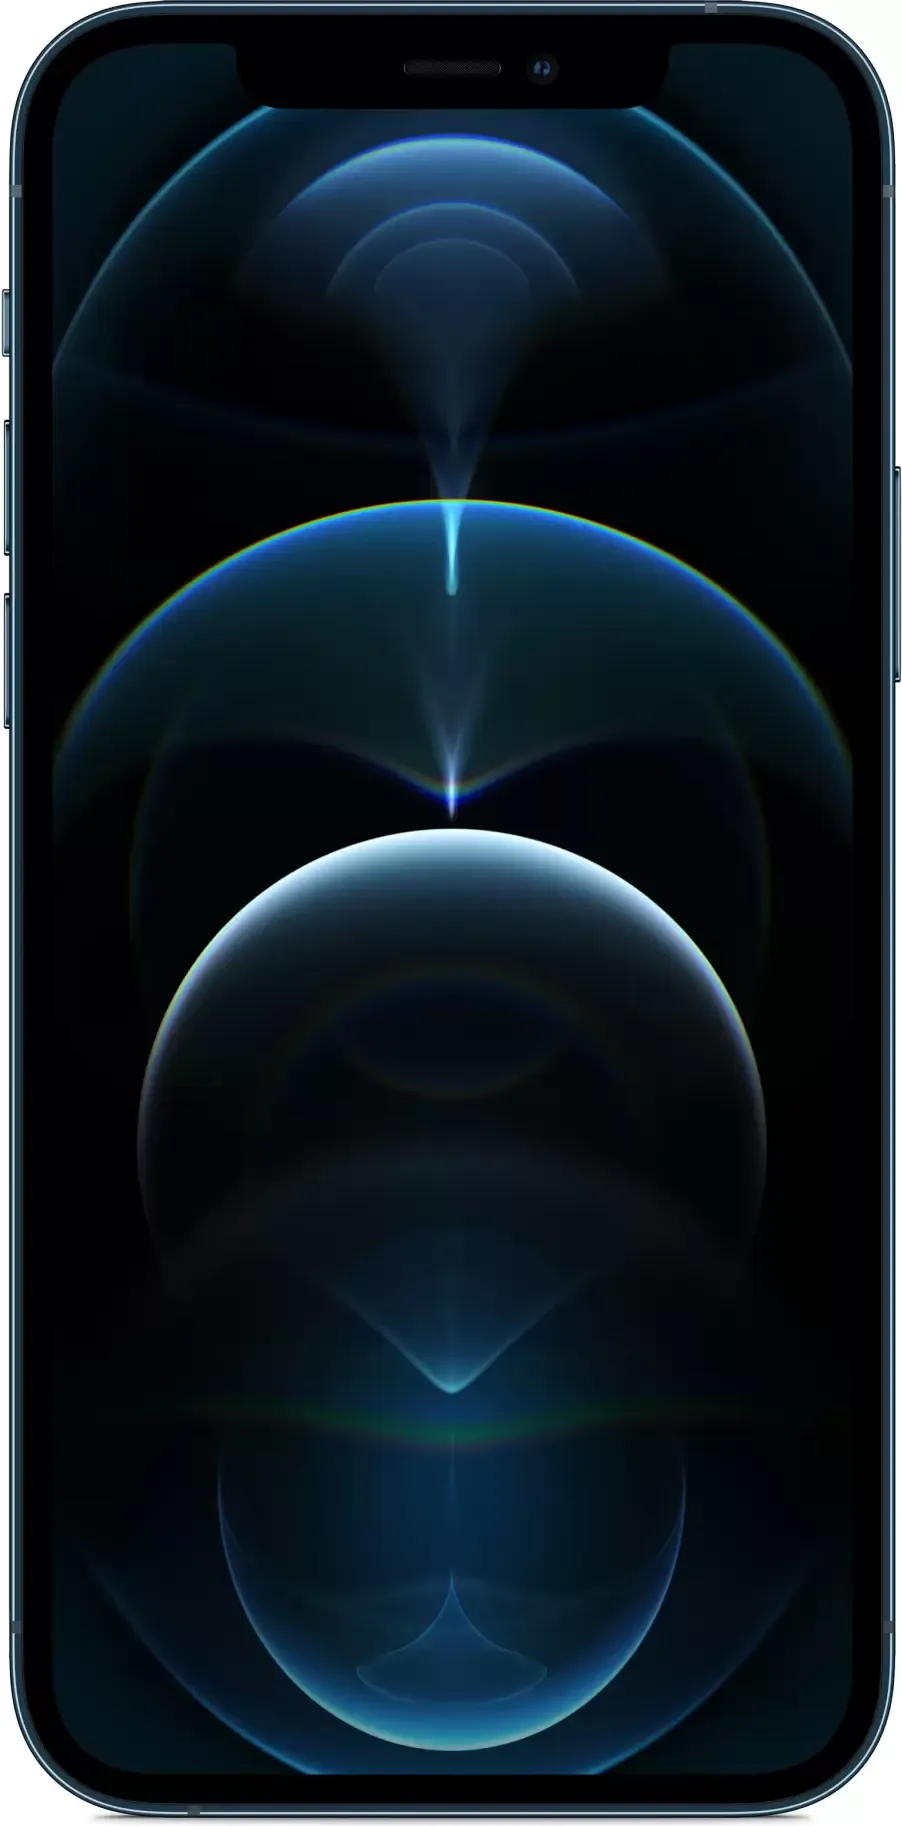 Apple iPhone 12 Pro (512GB) slide image 0